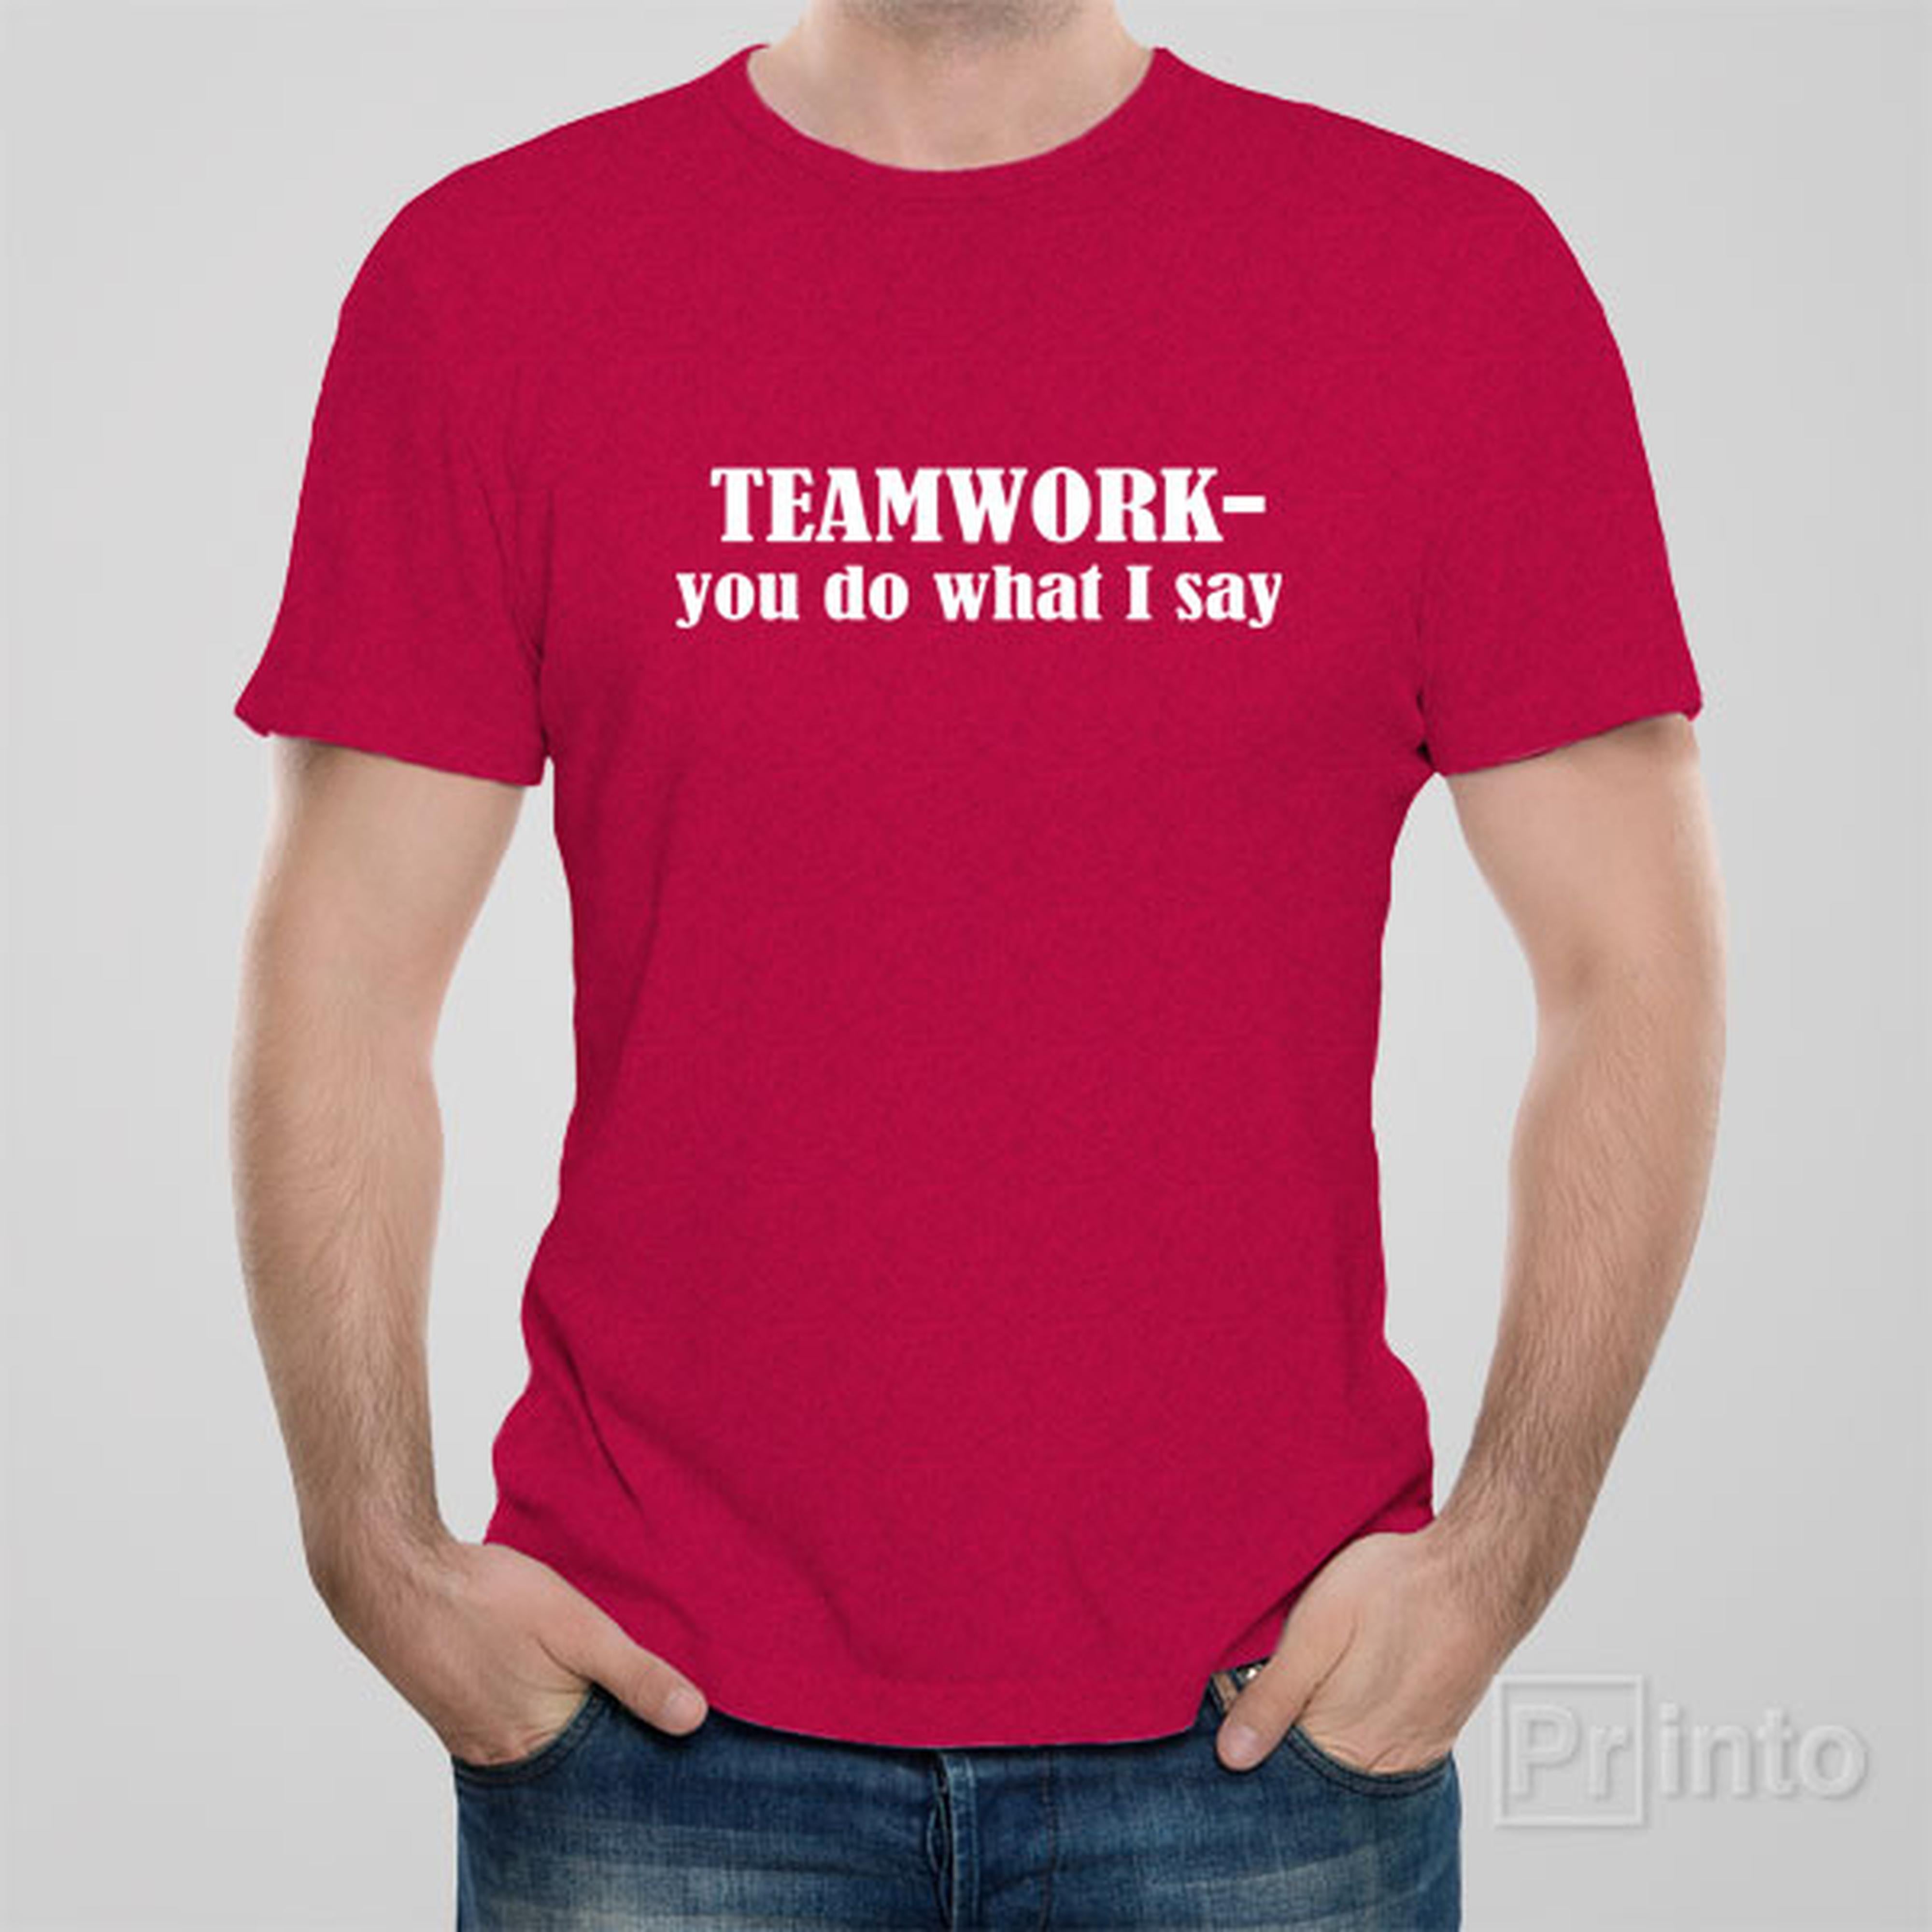 teamwork-you-do-what-i-say-t-shirt